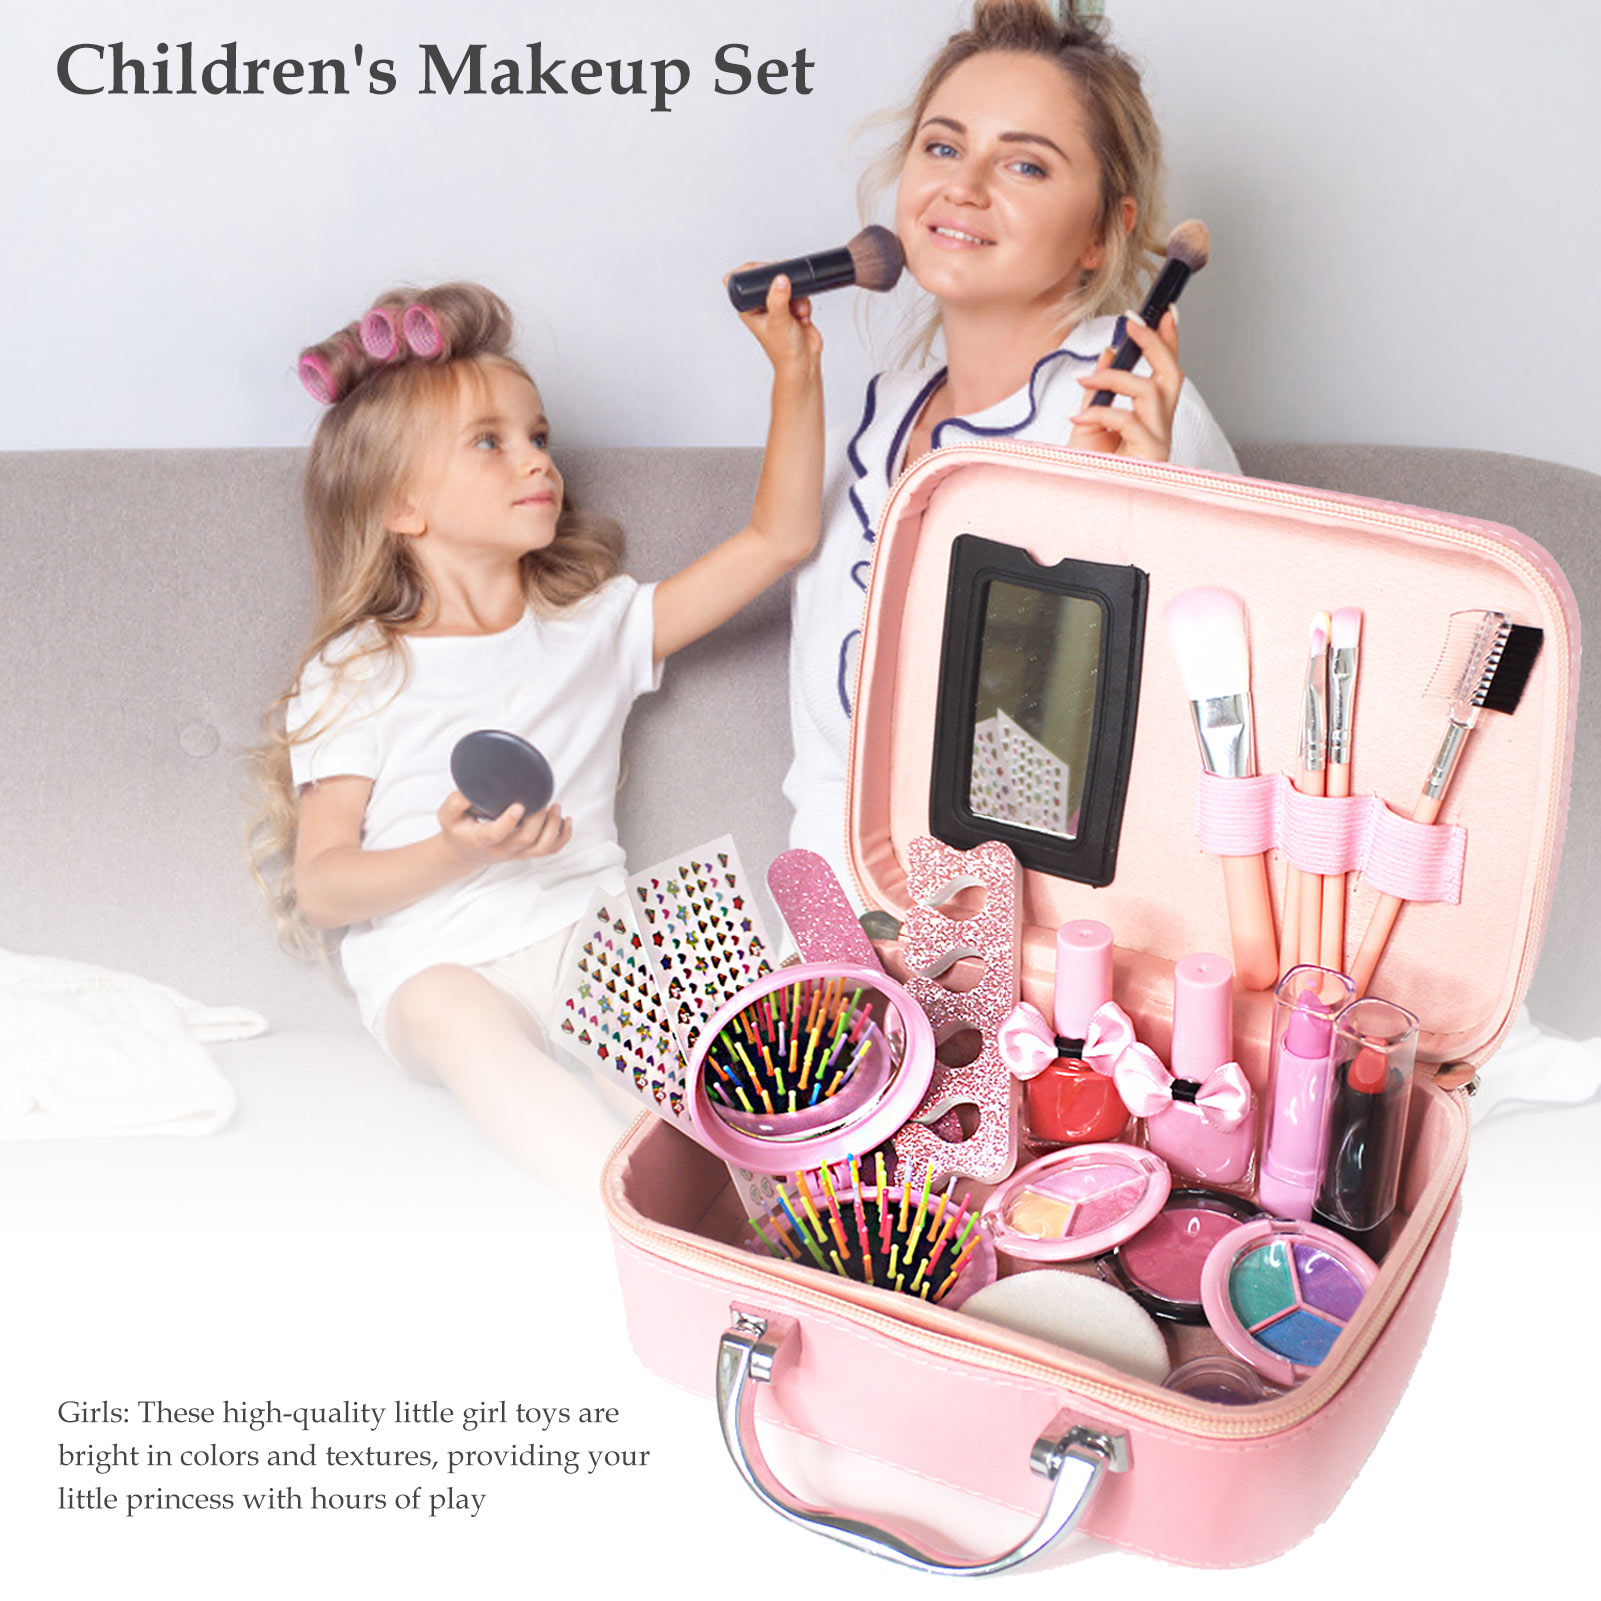 20PCS Washable Real Kids Makeup Kit With Safety Mirror,Kids Make up set,Girls Toy Make Up Kits,Makeup set for kids,Kids Make up set,Pretend Child Beauty Salon